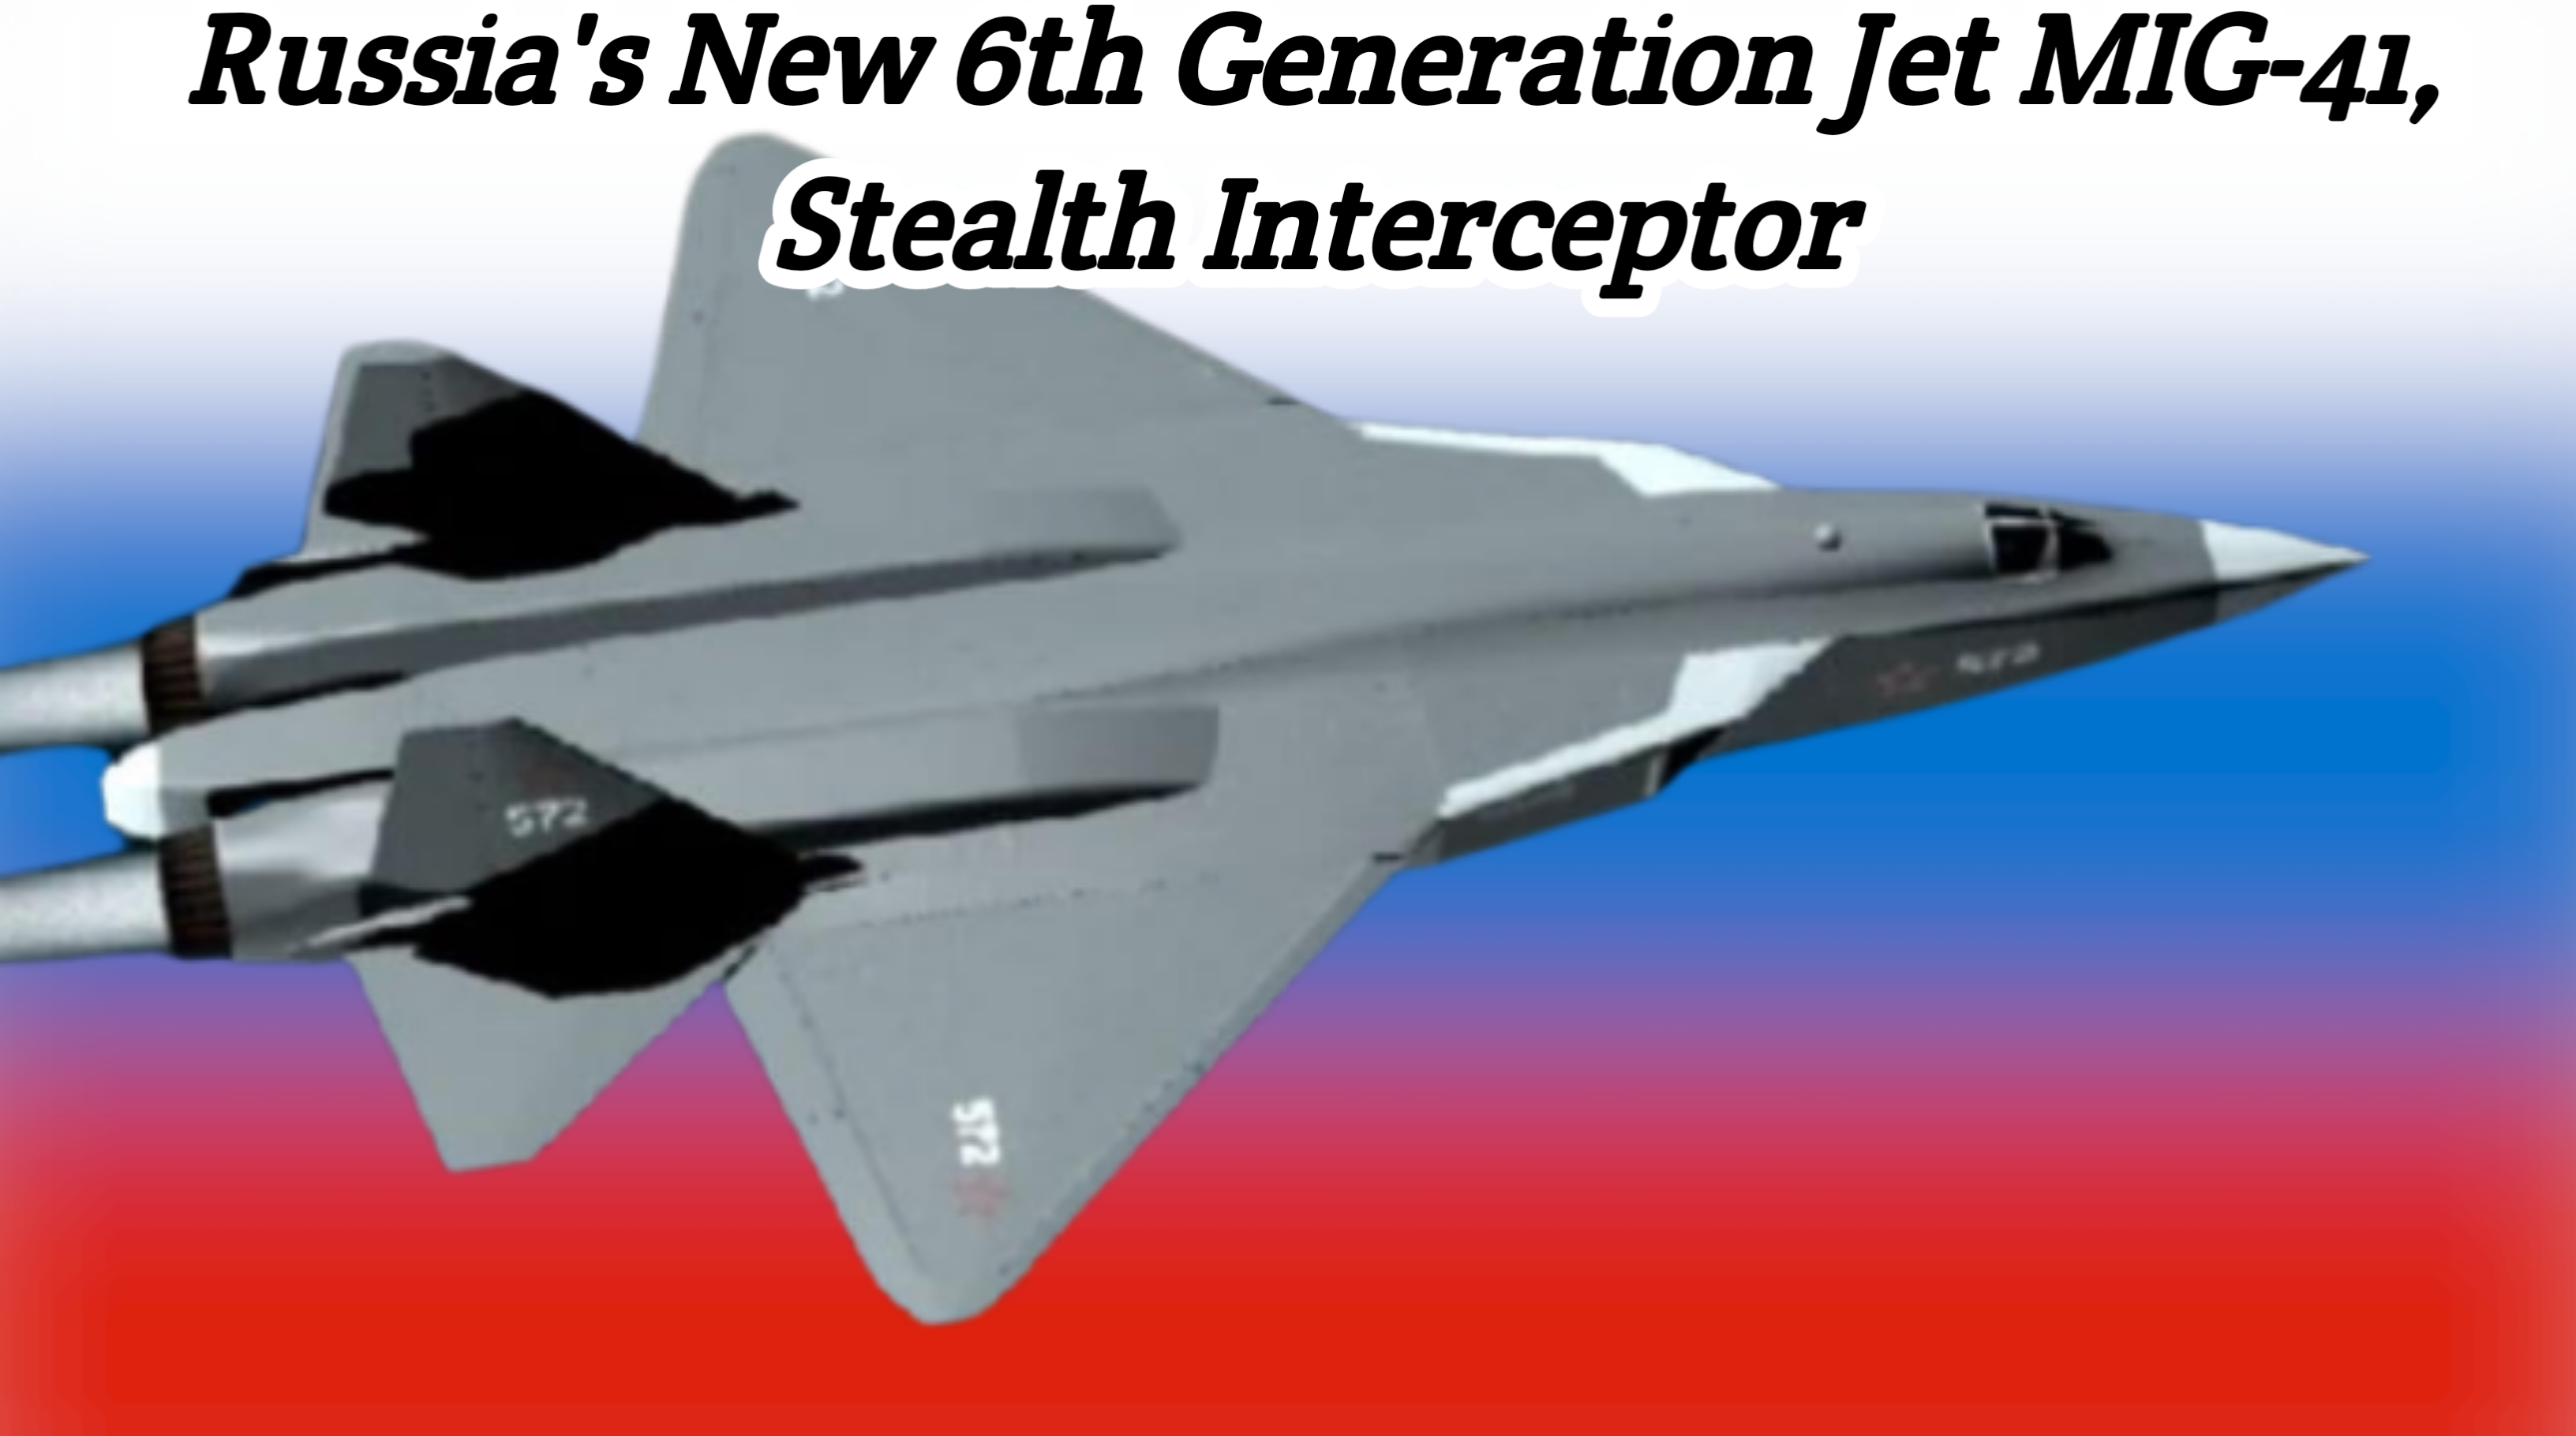 Russia's New 6th Generation Jet MIG-41, Stealth Interceptor